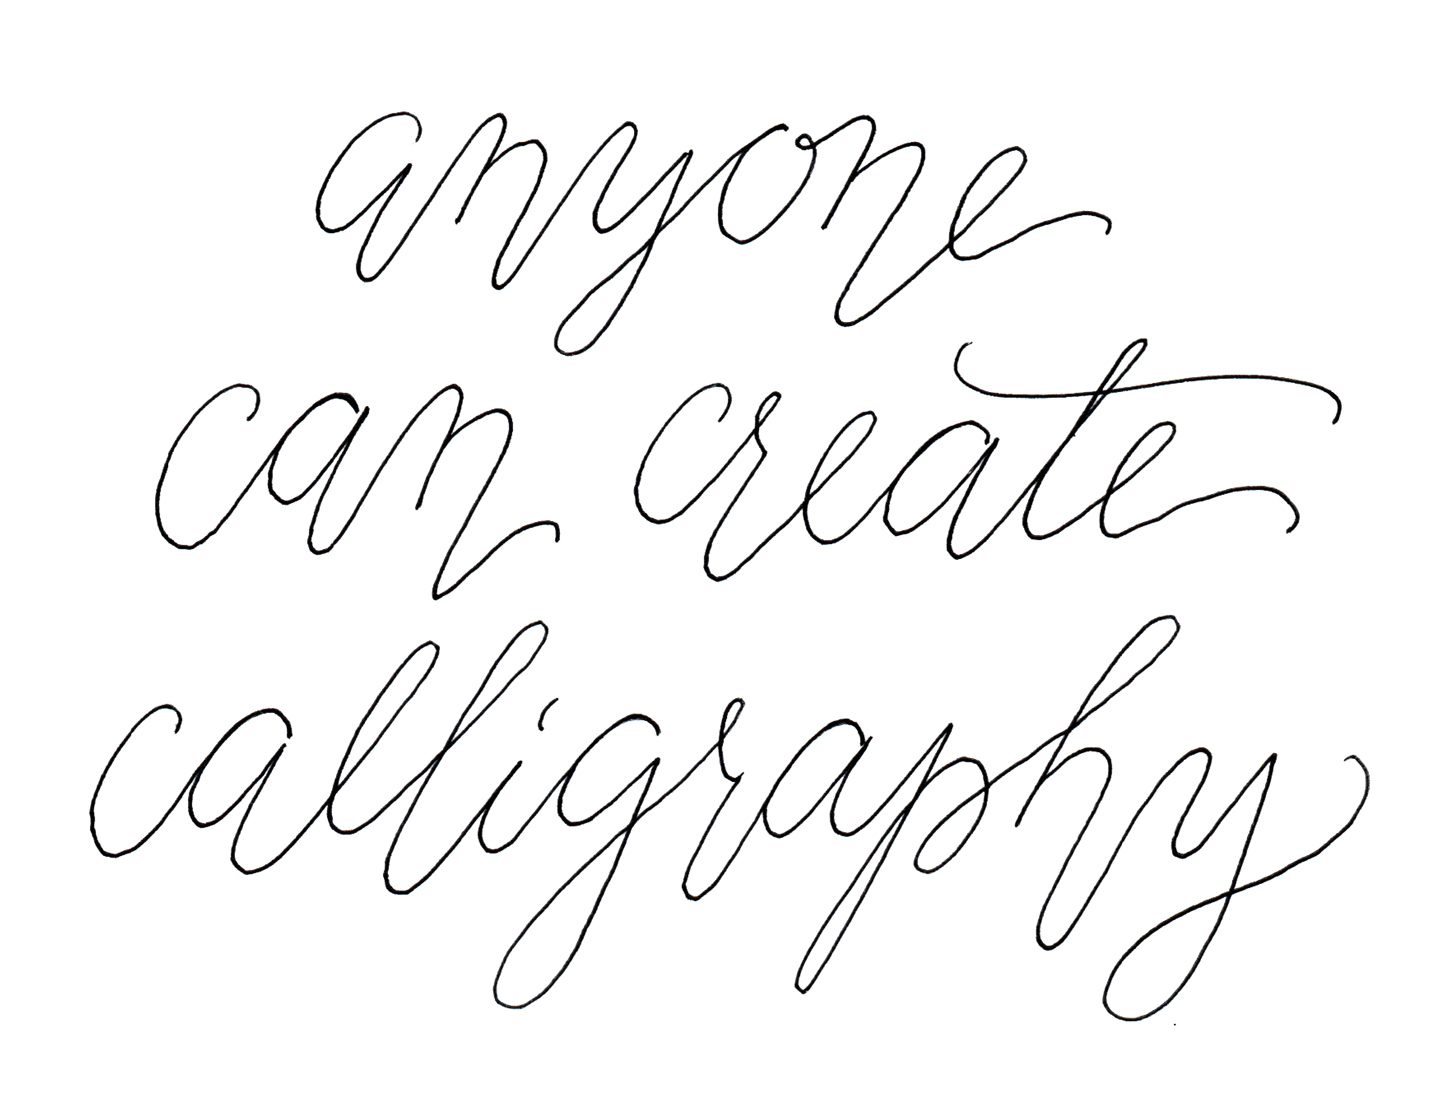 cheating_calligraphy_1.jpg? ...